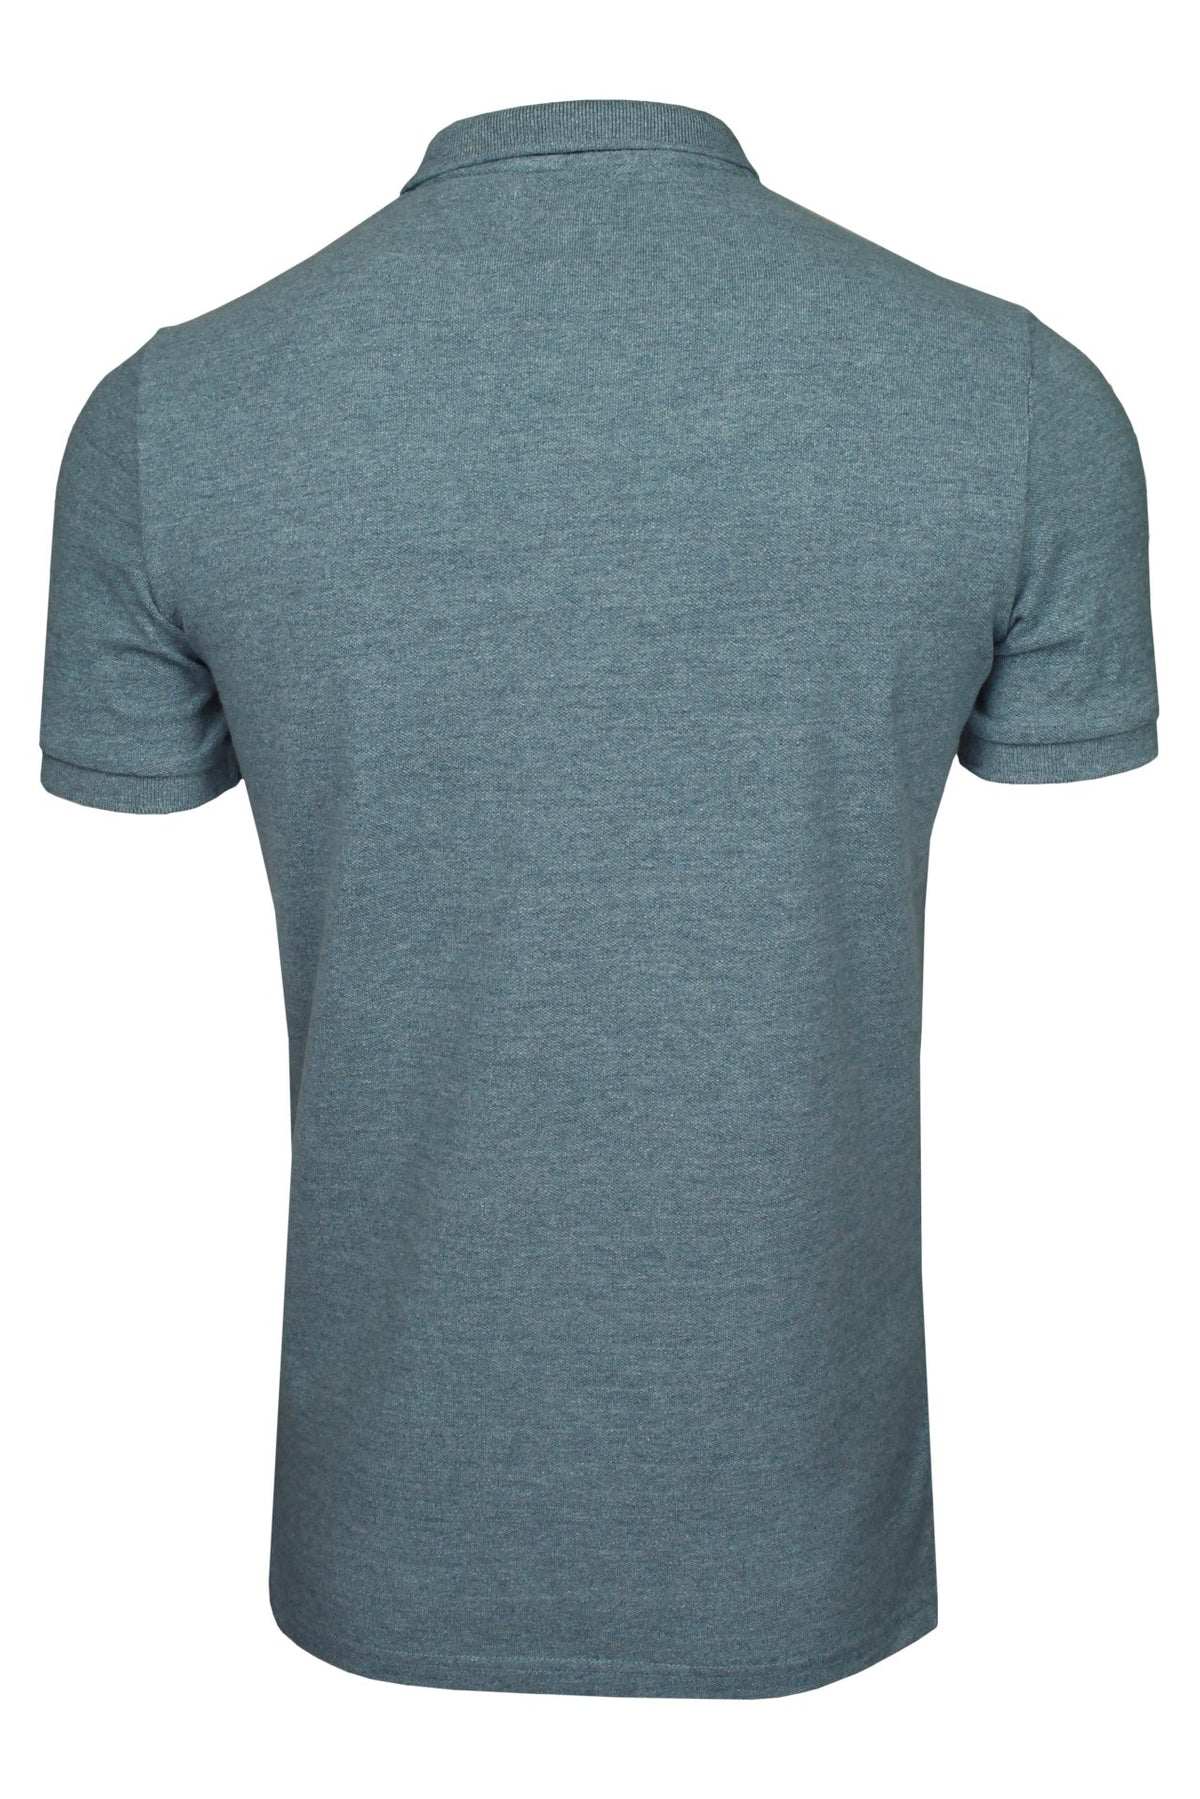 Superdry Polo Shirt 'Classic Pique Polo' Short Sleeve, 03, M1110247A, Desert Sky Blue Grit